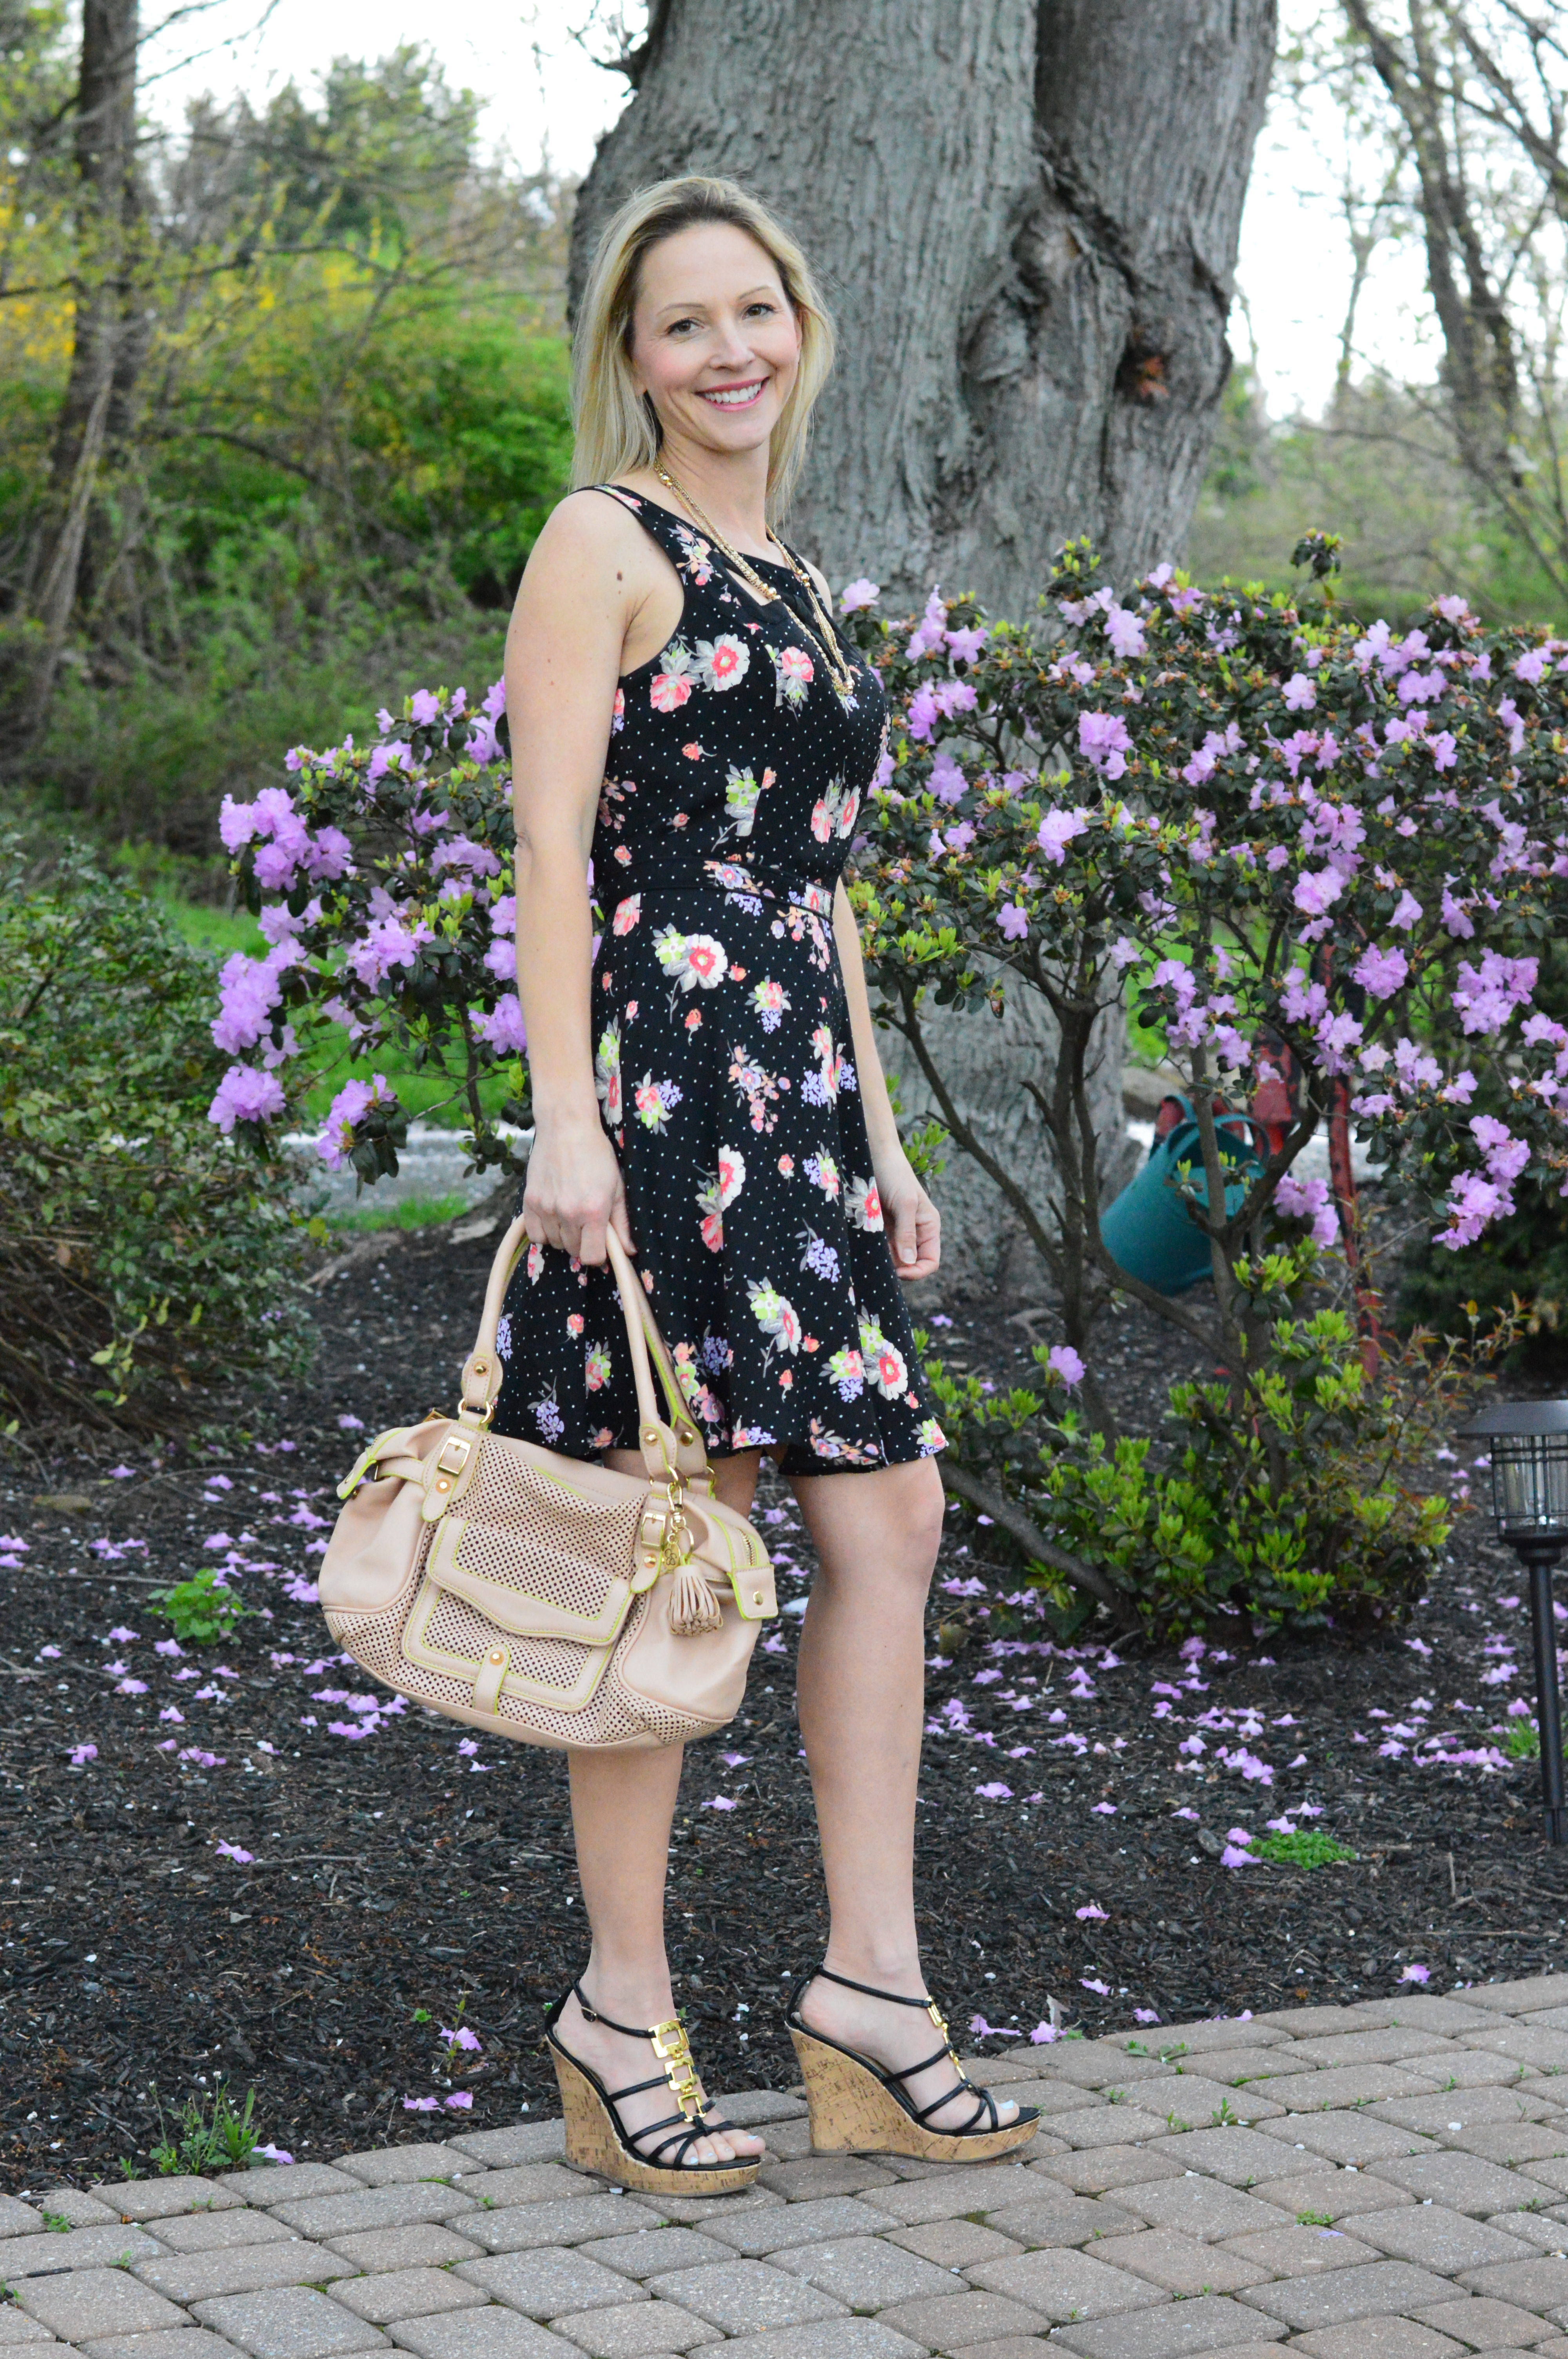 LC Lauren Conrad Handbags On Sale Up To 90% Off Retail